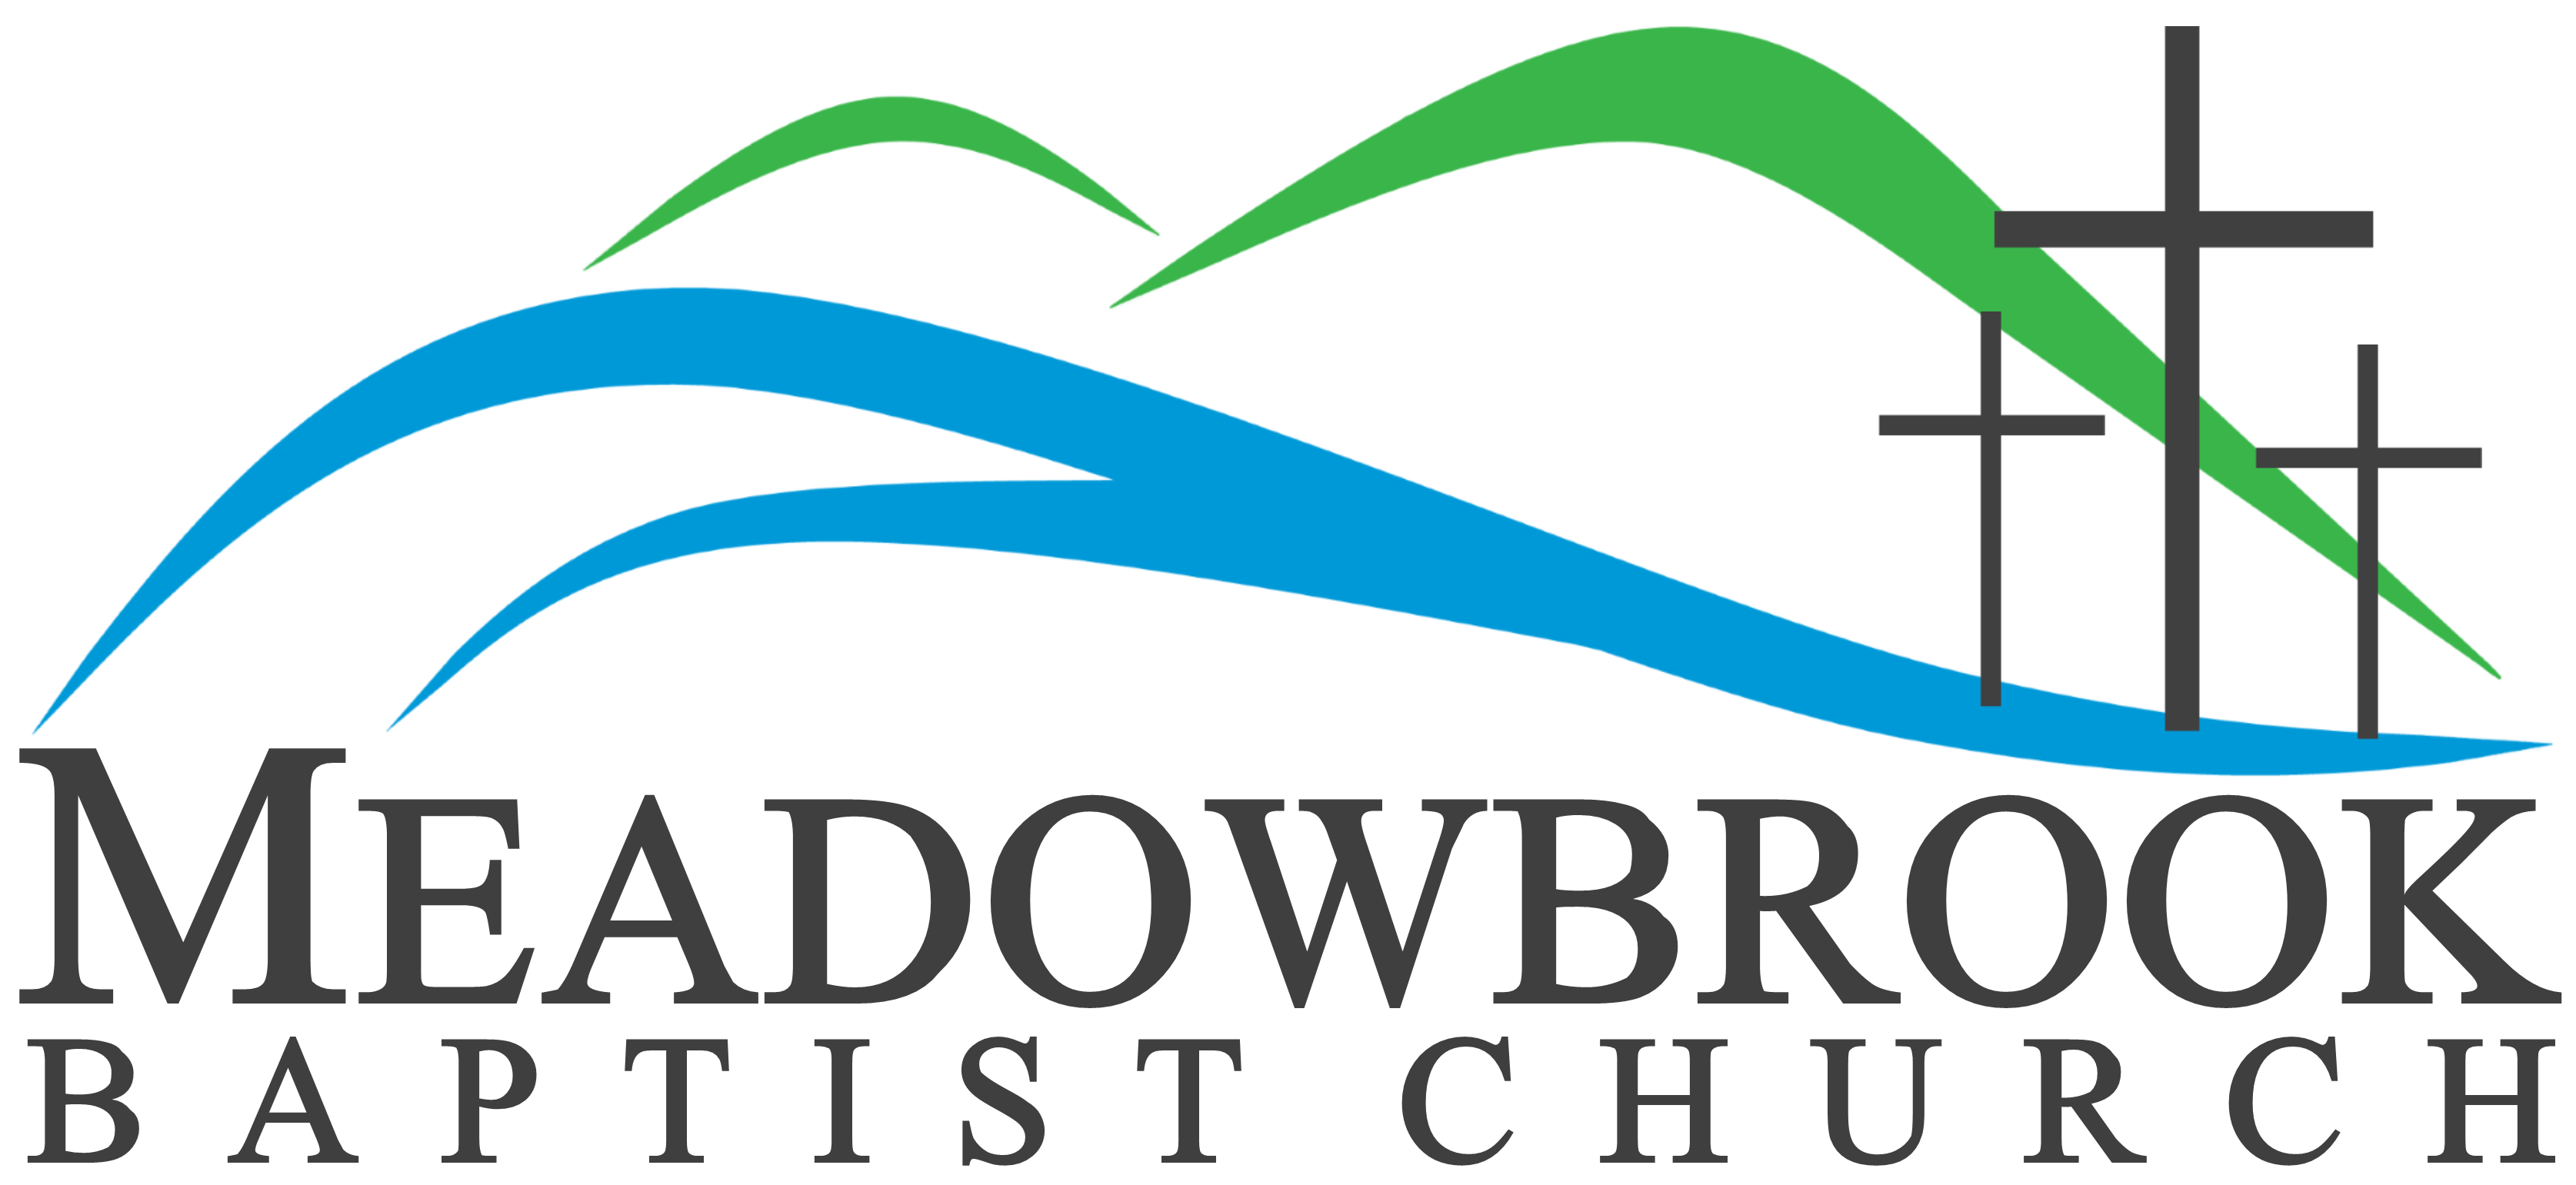 Meadowbrook Baptist Church